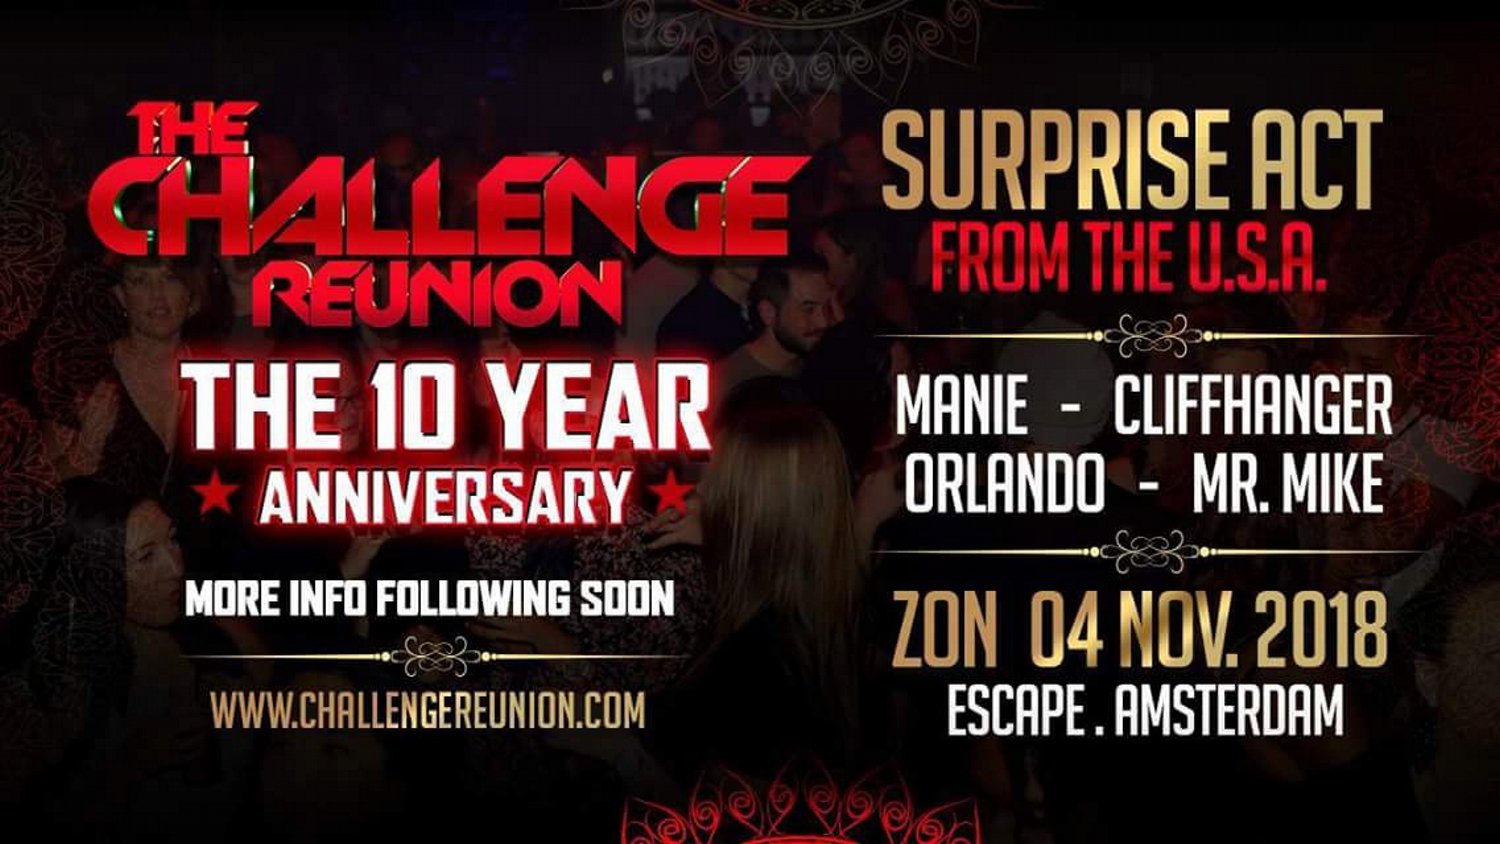 The Challenge Reunion 10 YEAR ANNIVERSARY